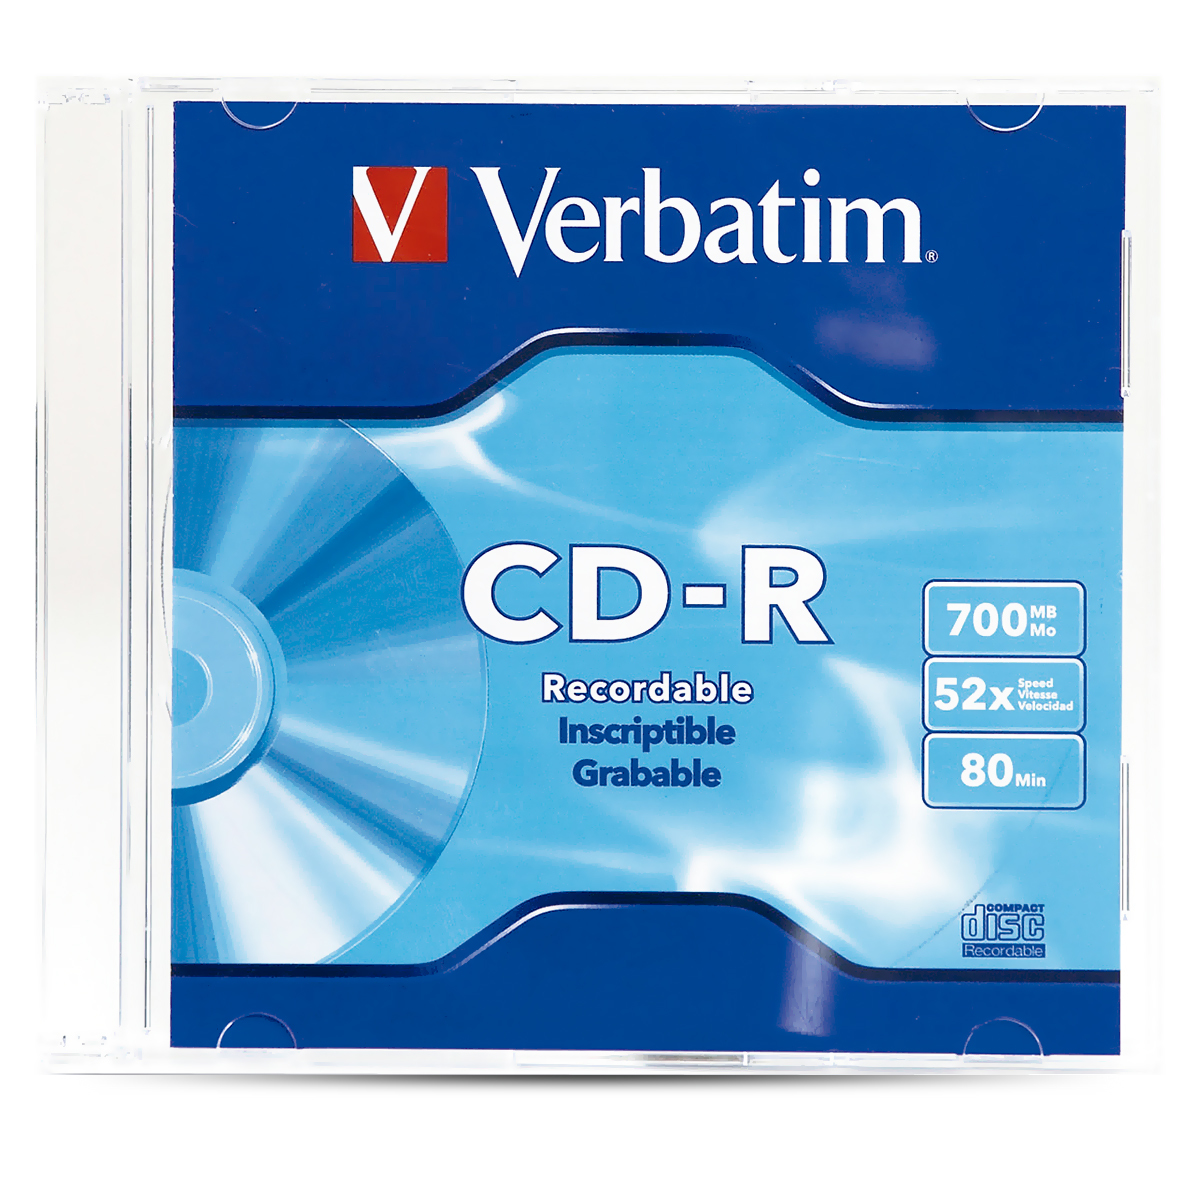 CD-R Verbatim 94776 700 mb 52x 80 min. Estuche 1 pieza | Office Depot Mexico